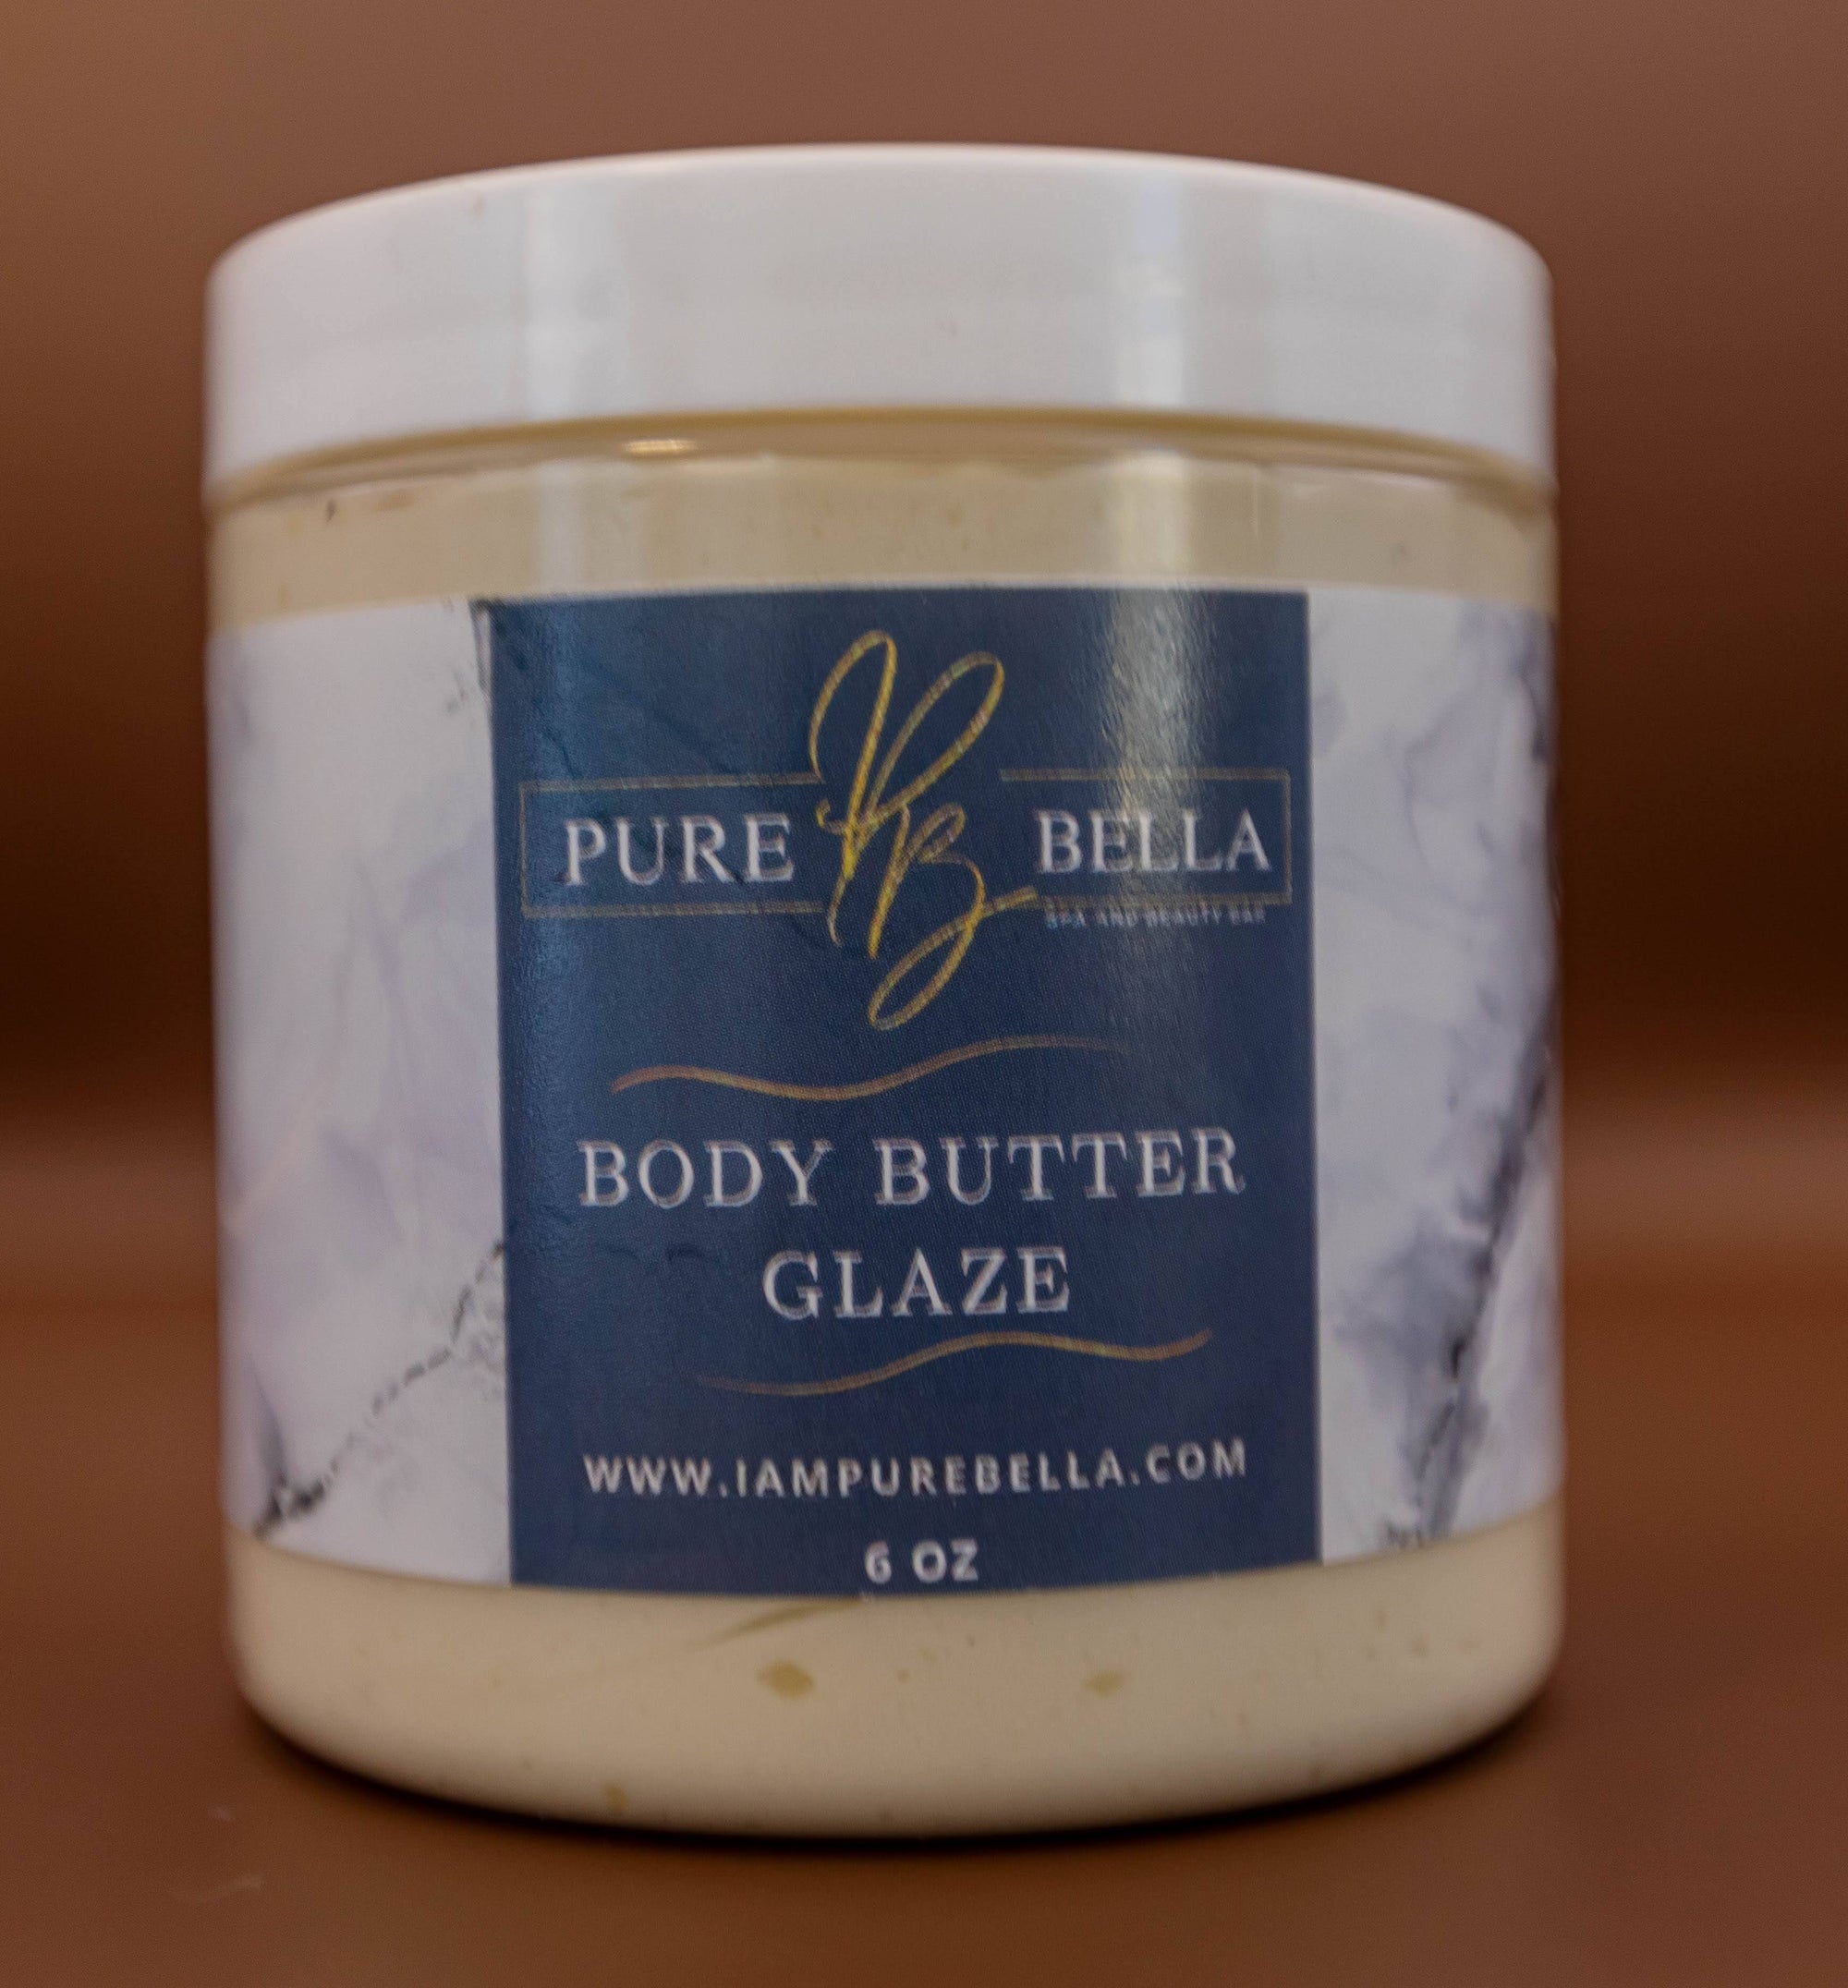 Body Butter Glaze